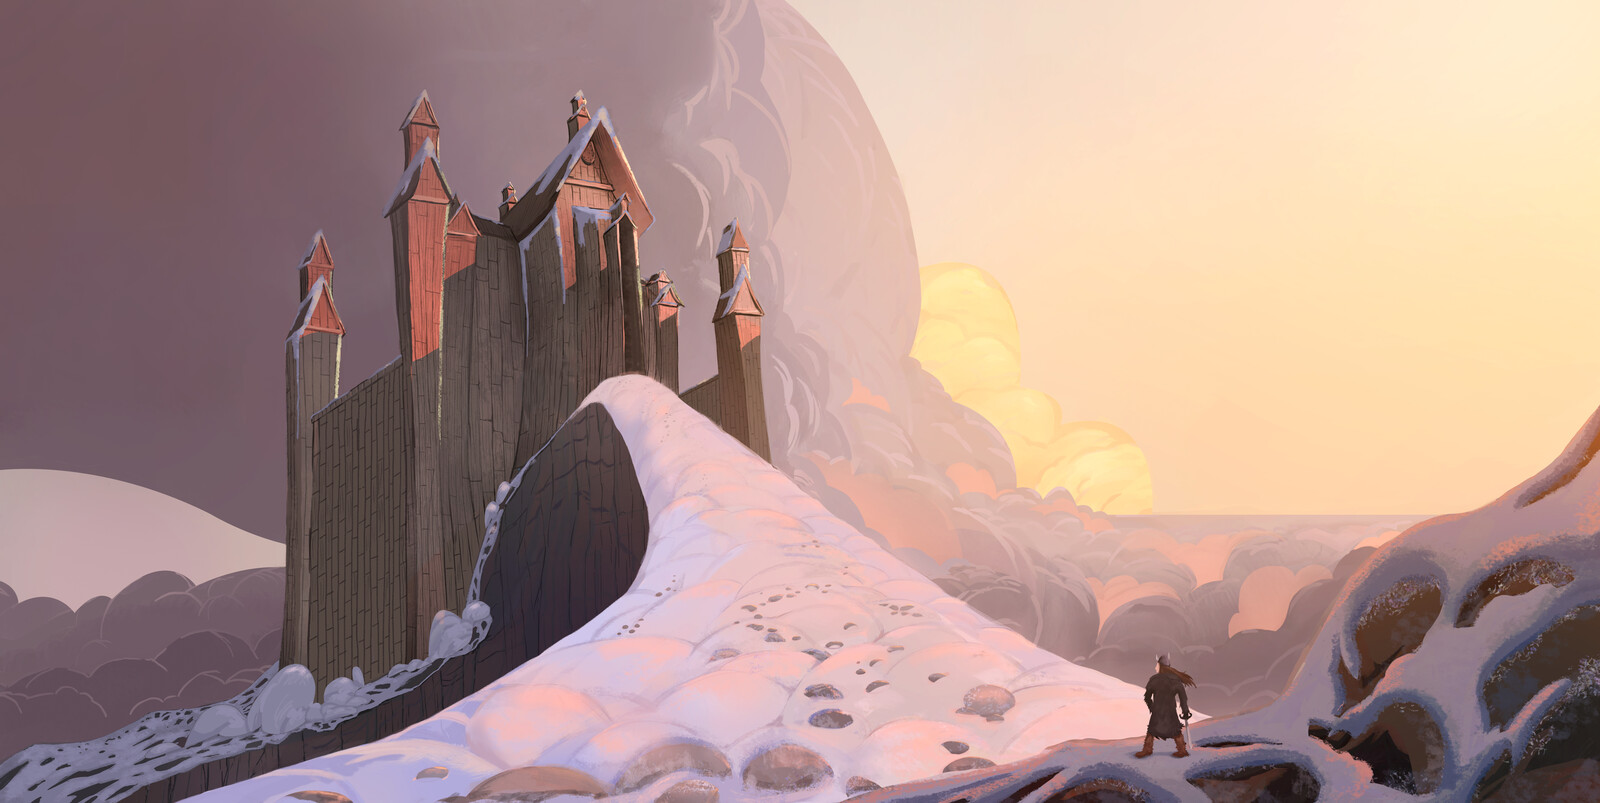 The Winter Castle